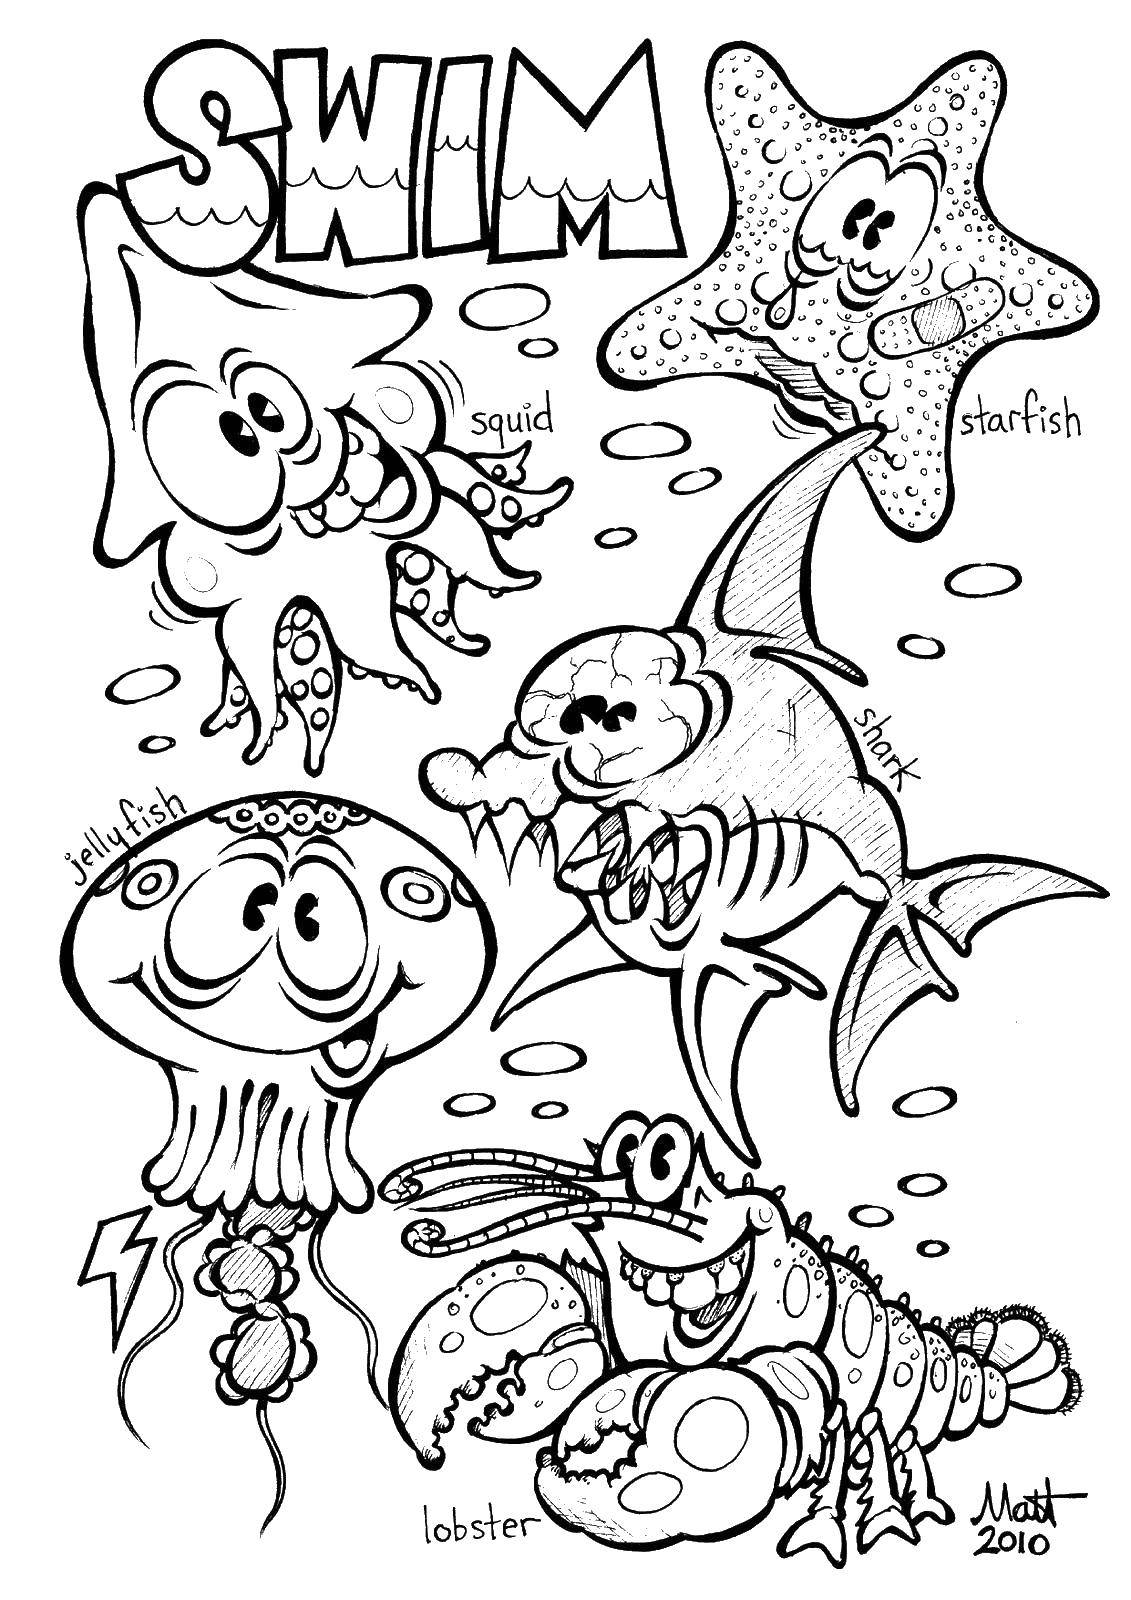 Coloring Swim. Category Marine animals. Tags:  marine life animals.